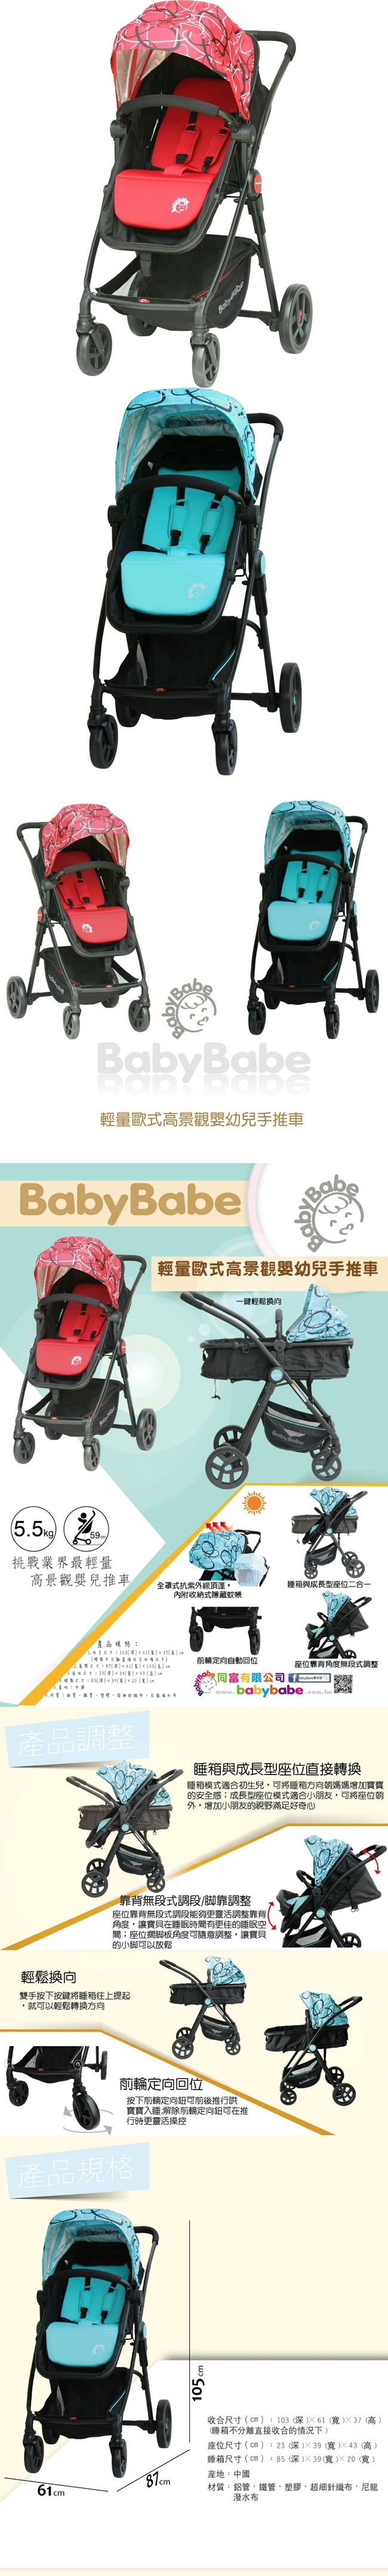 BabyBabe-輕量化歐式高景觀嬰幼兒手推車(圈圈紅/圈圈藍)888